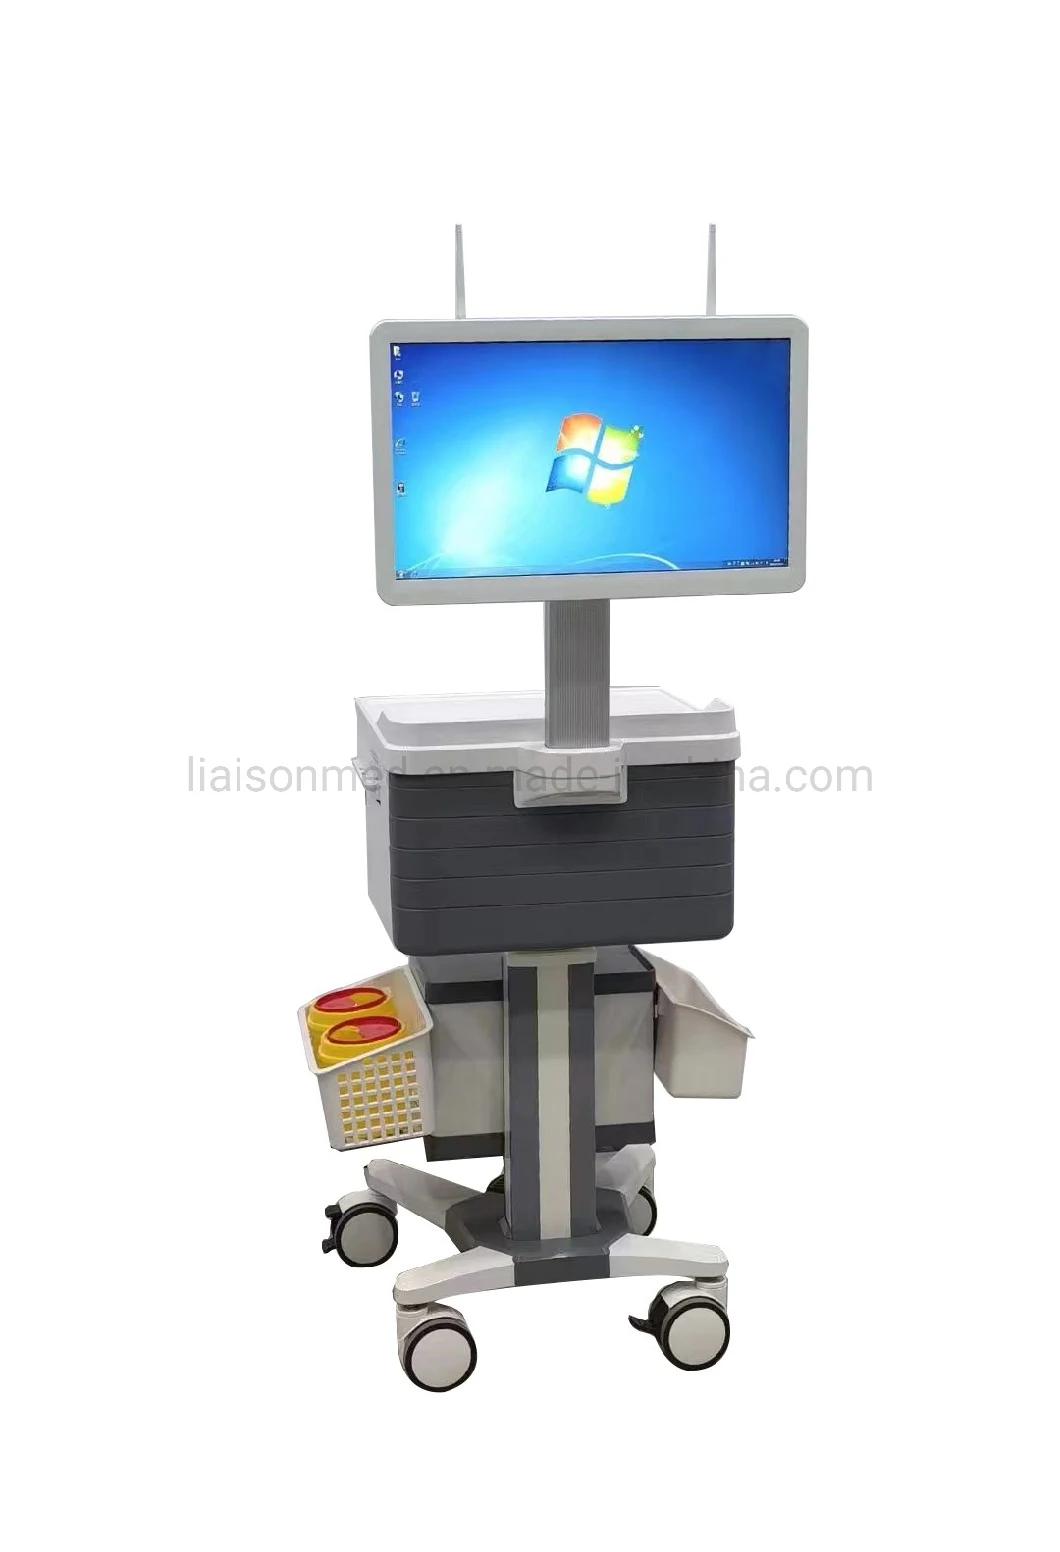 Mn-CPU001 Hot Sale Hospital Use Medical Computer Trolley for Nursing Workstation